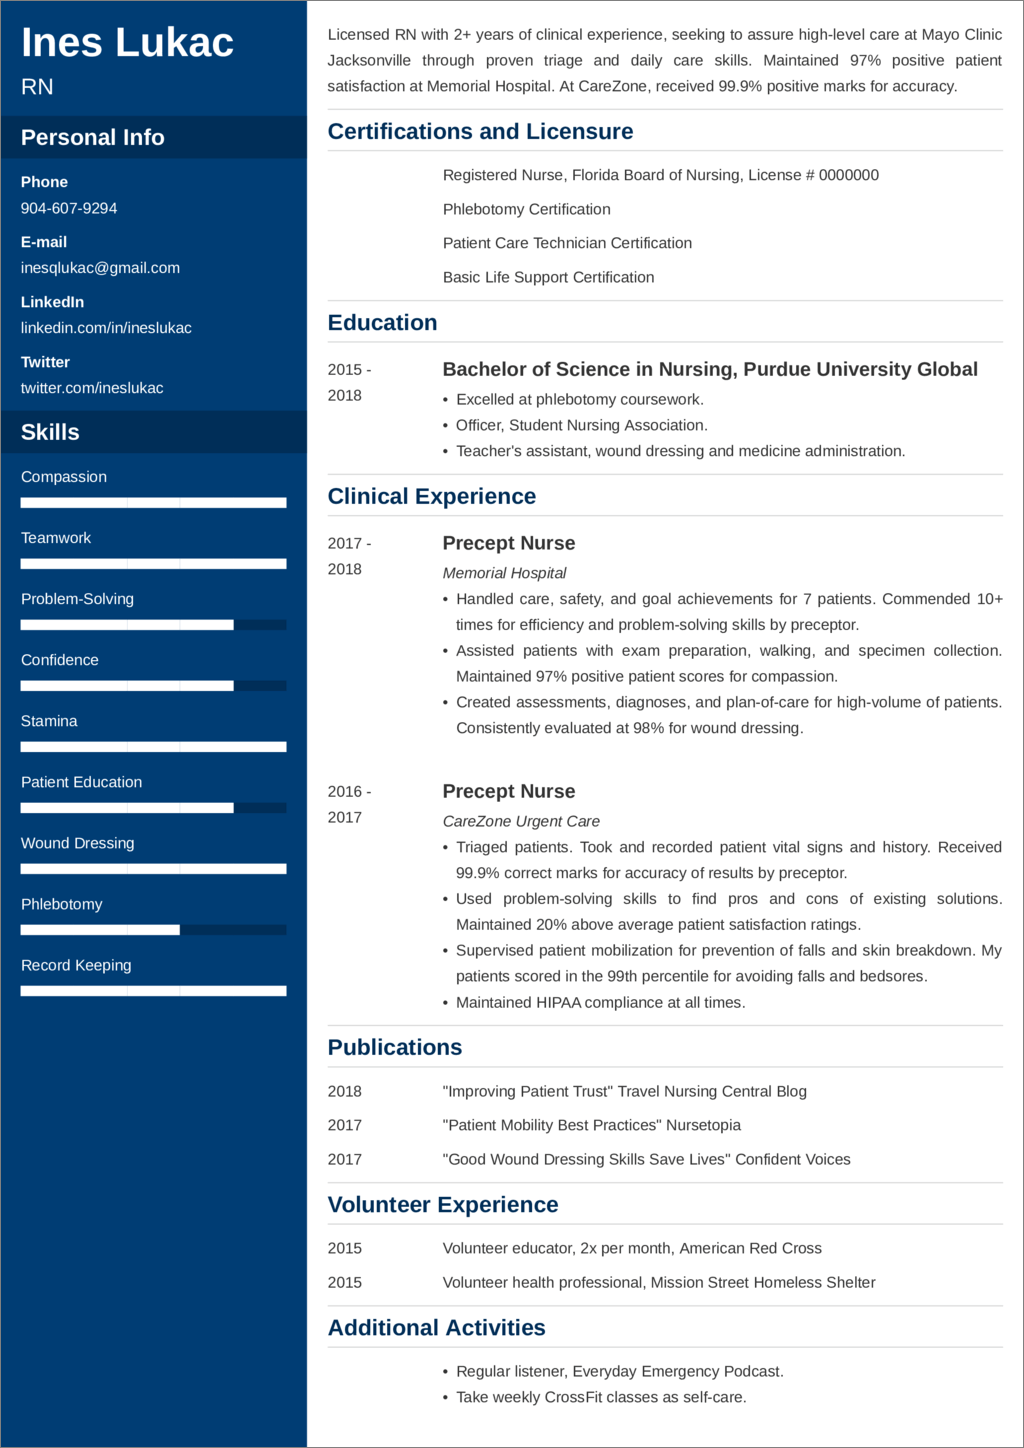 resume for college nursing student